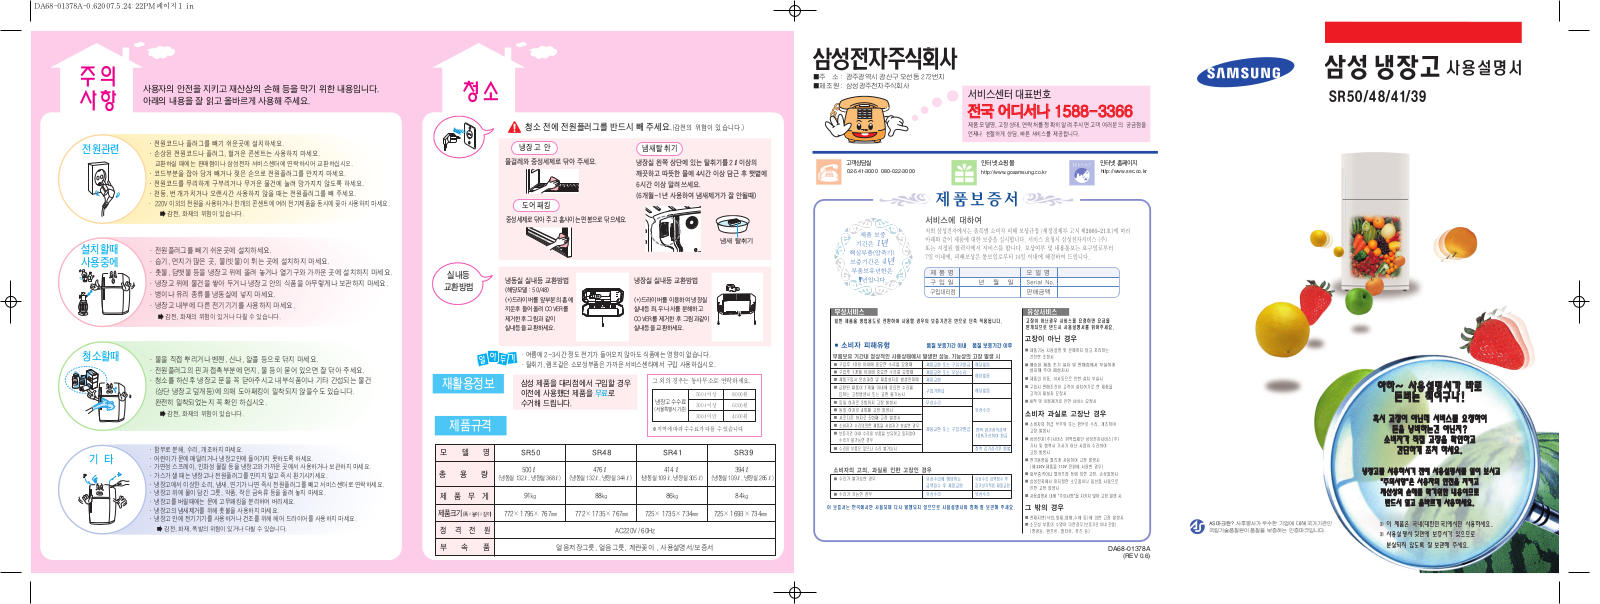 Samsung SR-501IC, SR-501LUY, SR-501LM, SR-501IM, SR-412UC Manual